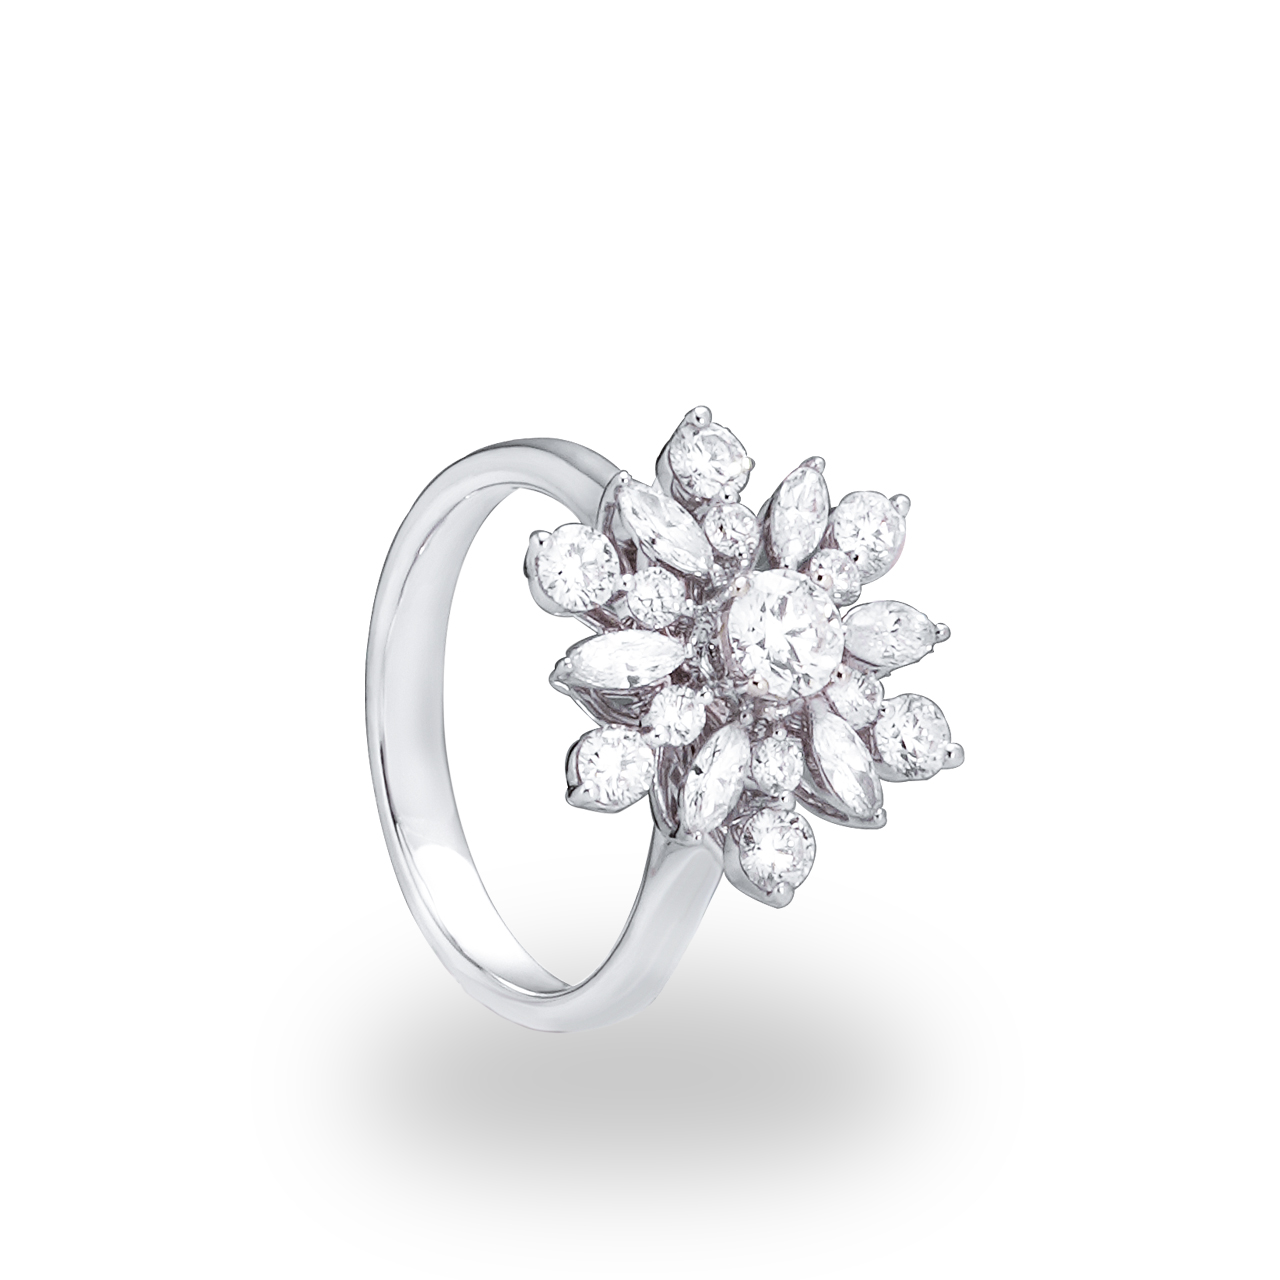 Snowflake Diamond Ring | Mirage Jewelry - Your Custom Jewelry